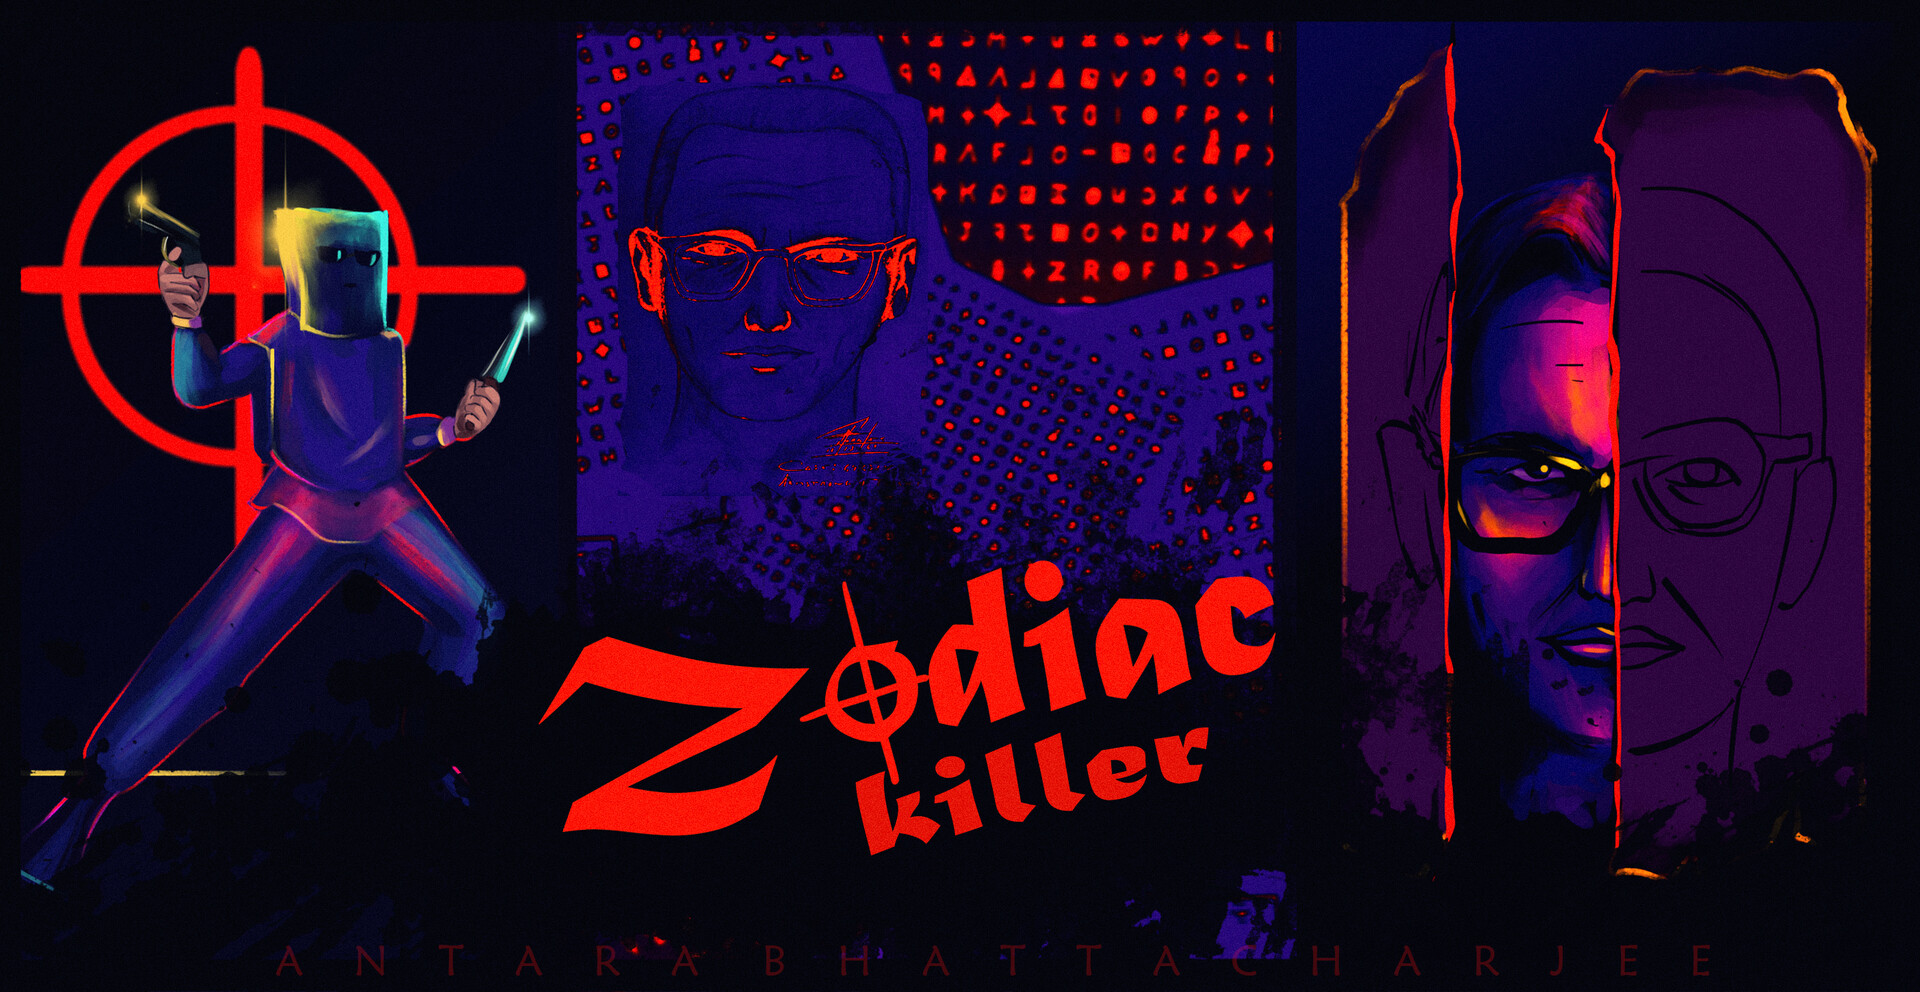 ArtStation - Zodiac killer